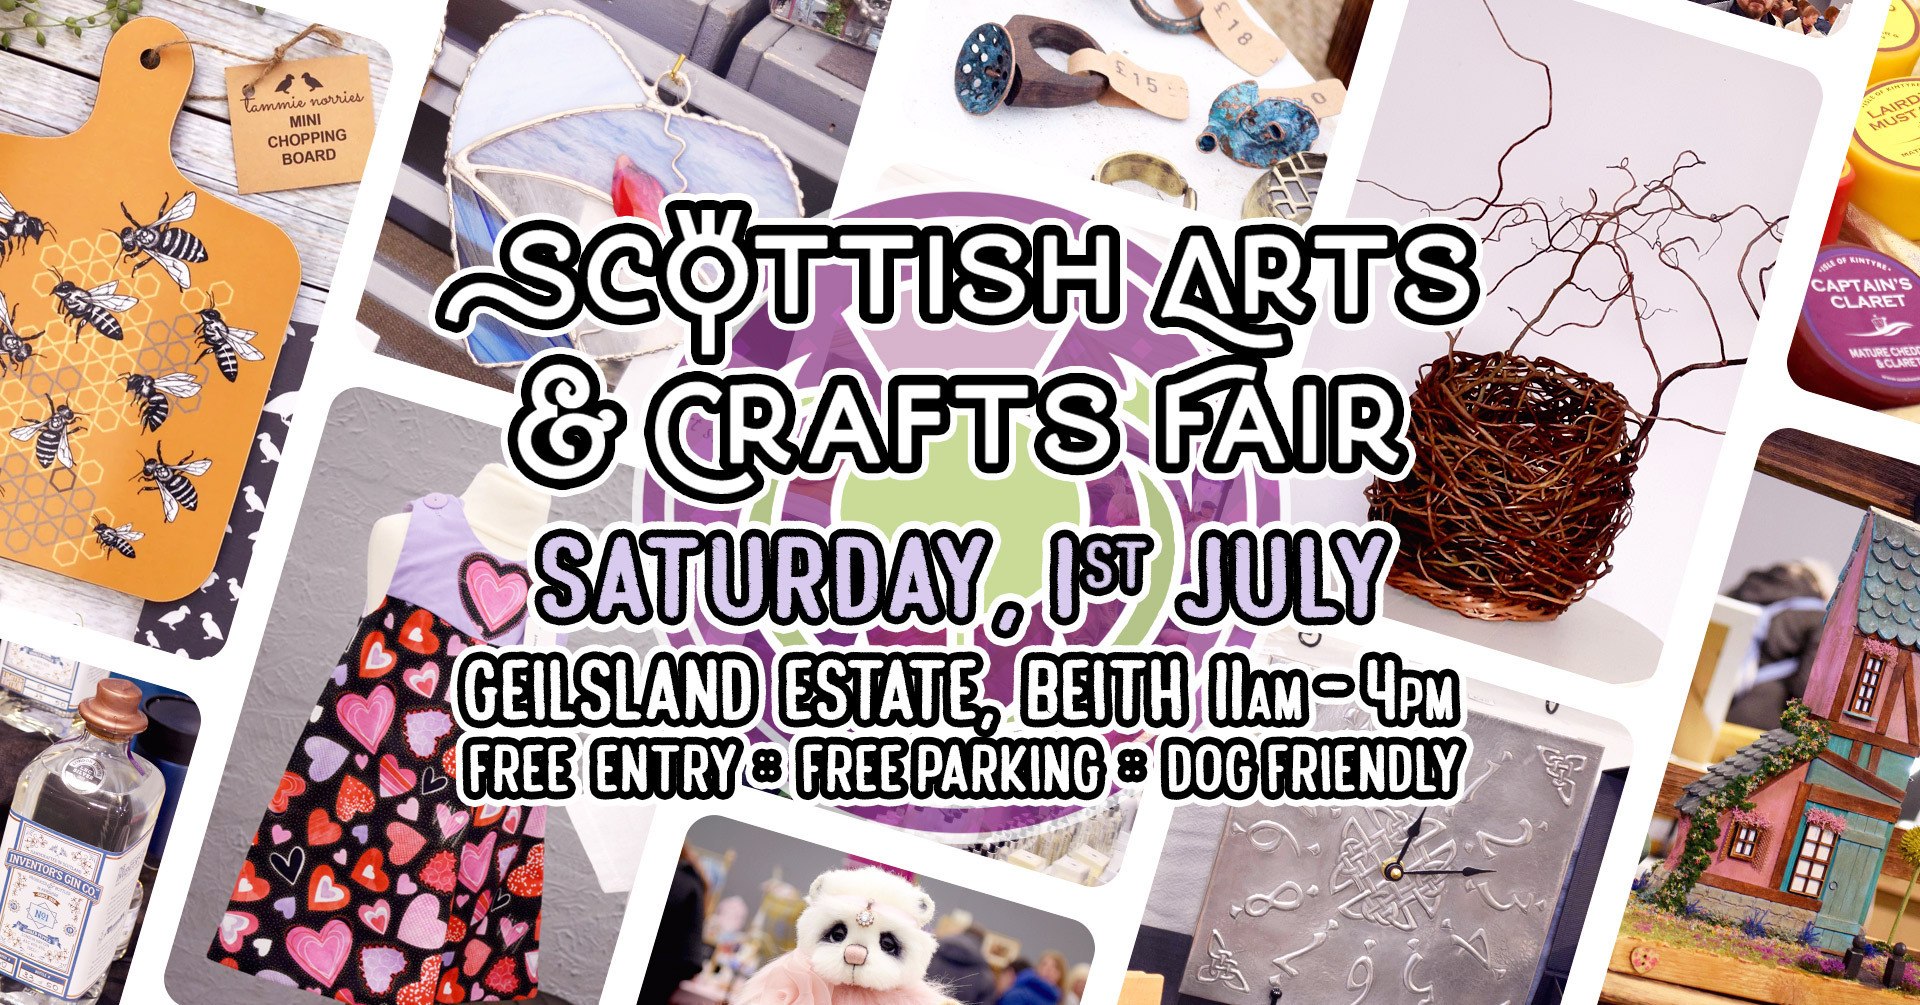 Scottish Arts and Crafts Fair - 1st July, Beith, Scotland, United Kingdom